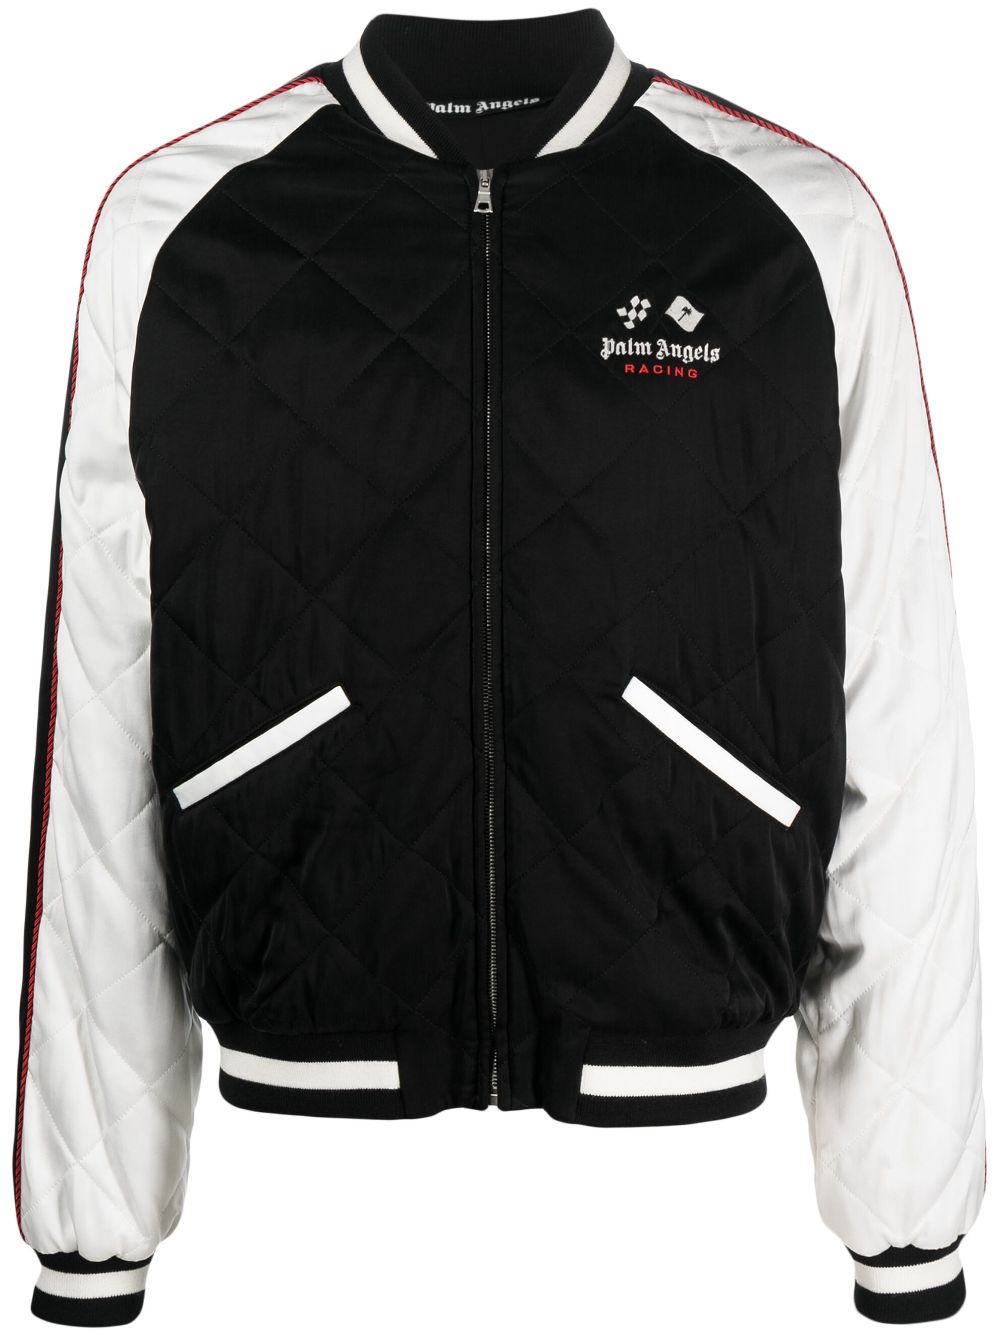 Palm Angels Racing Souvenir bomber jacket - Black von Palm Angels